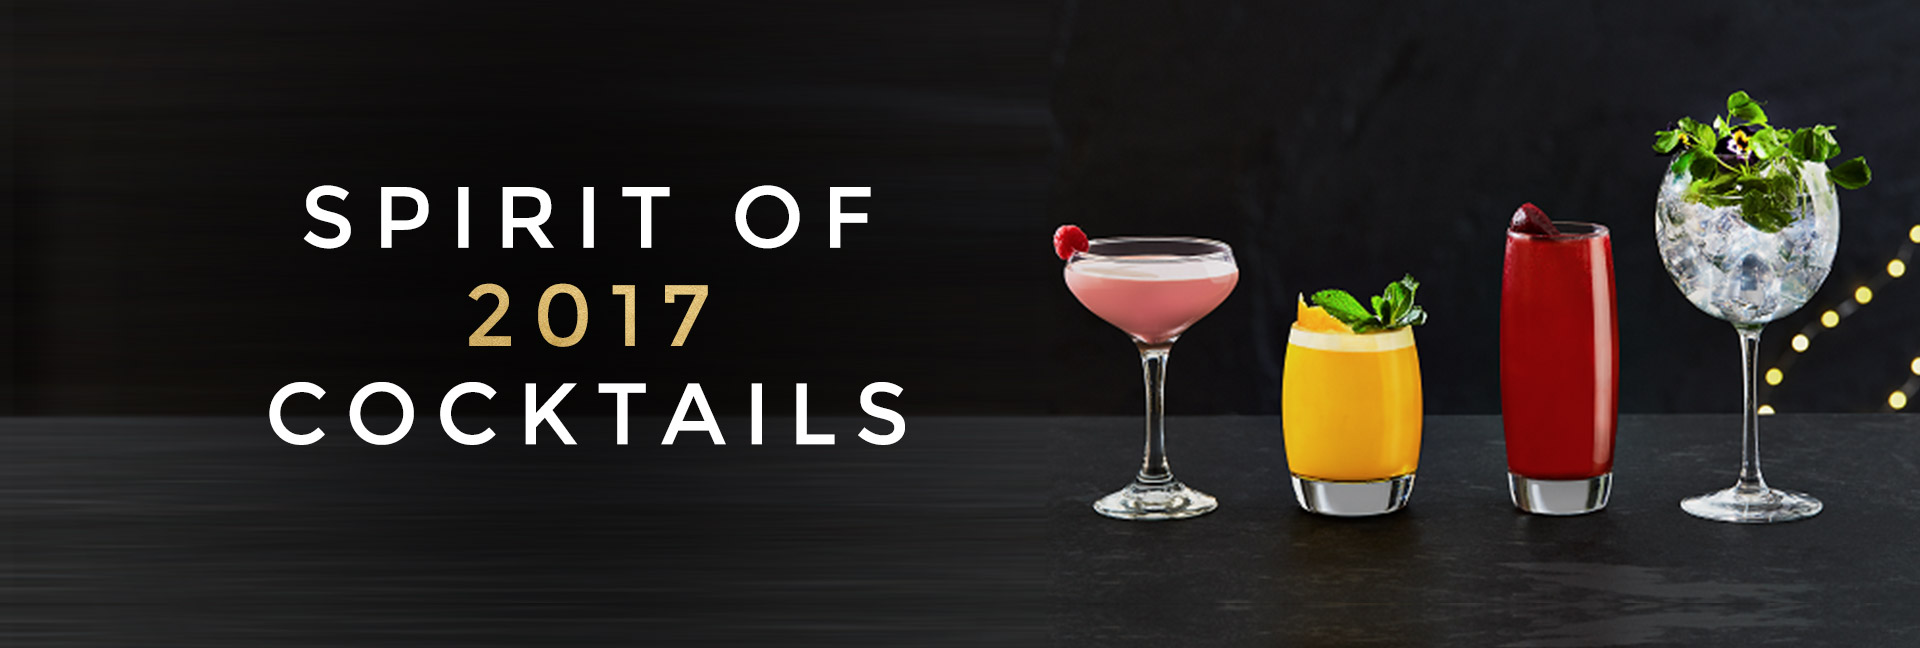 Spirit of 2017 cocktails at All Bar One Stratford Upon Avon